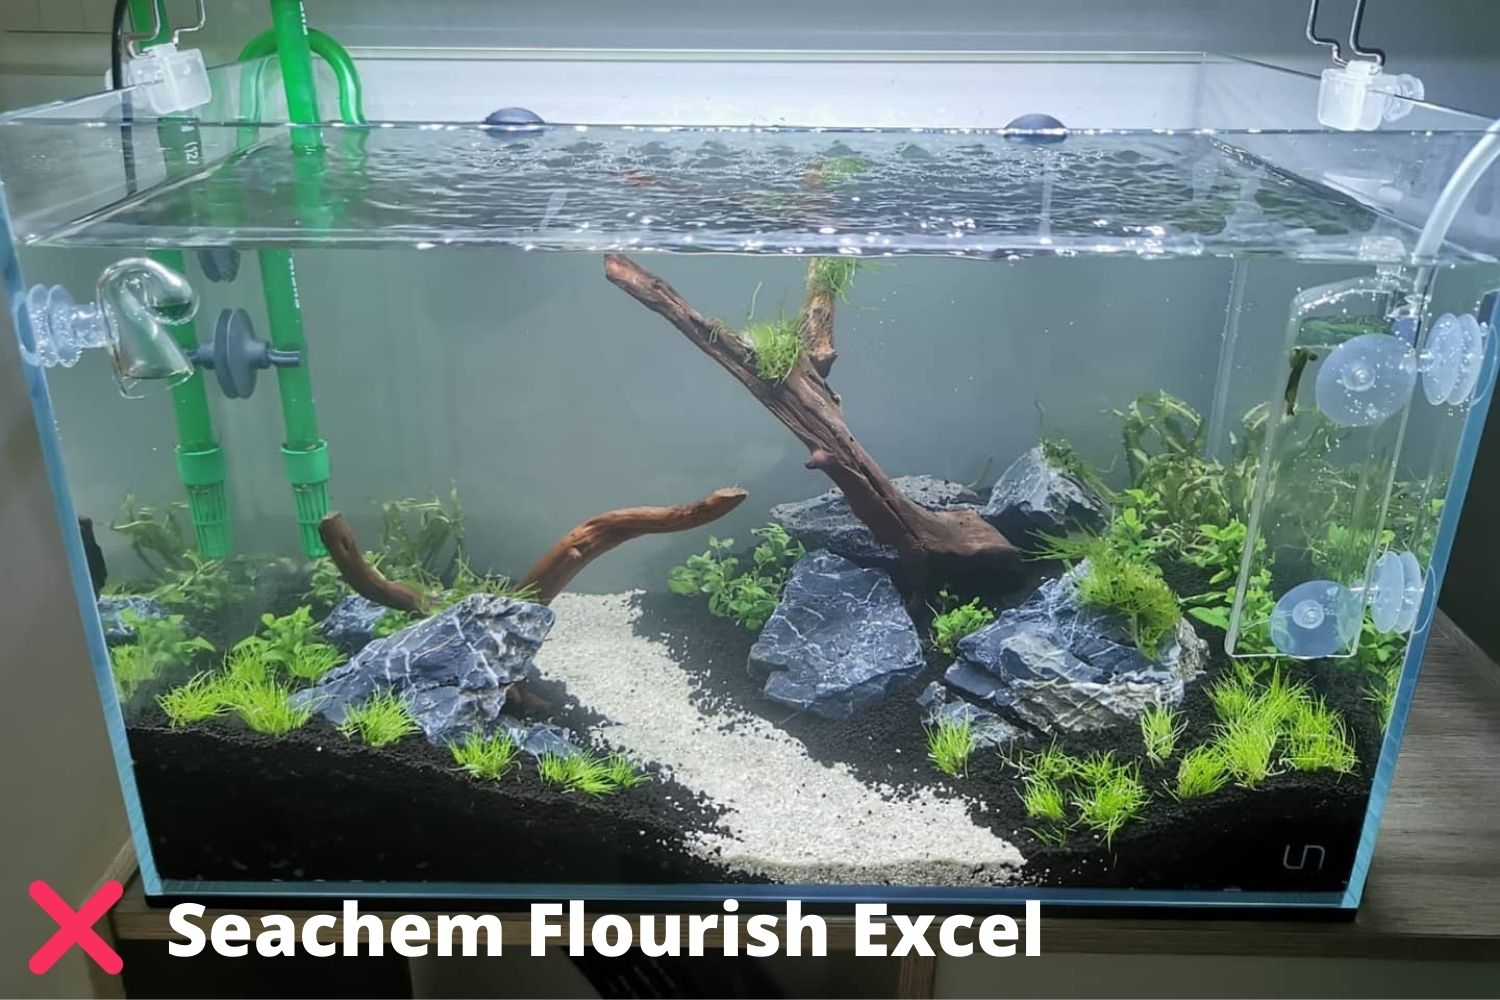 before using seachem flourish excel